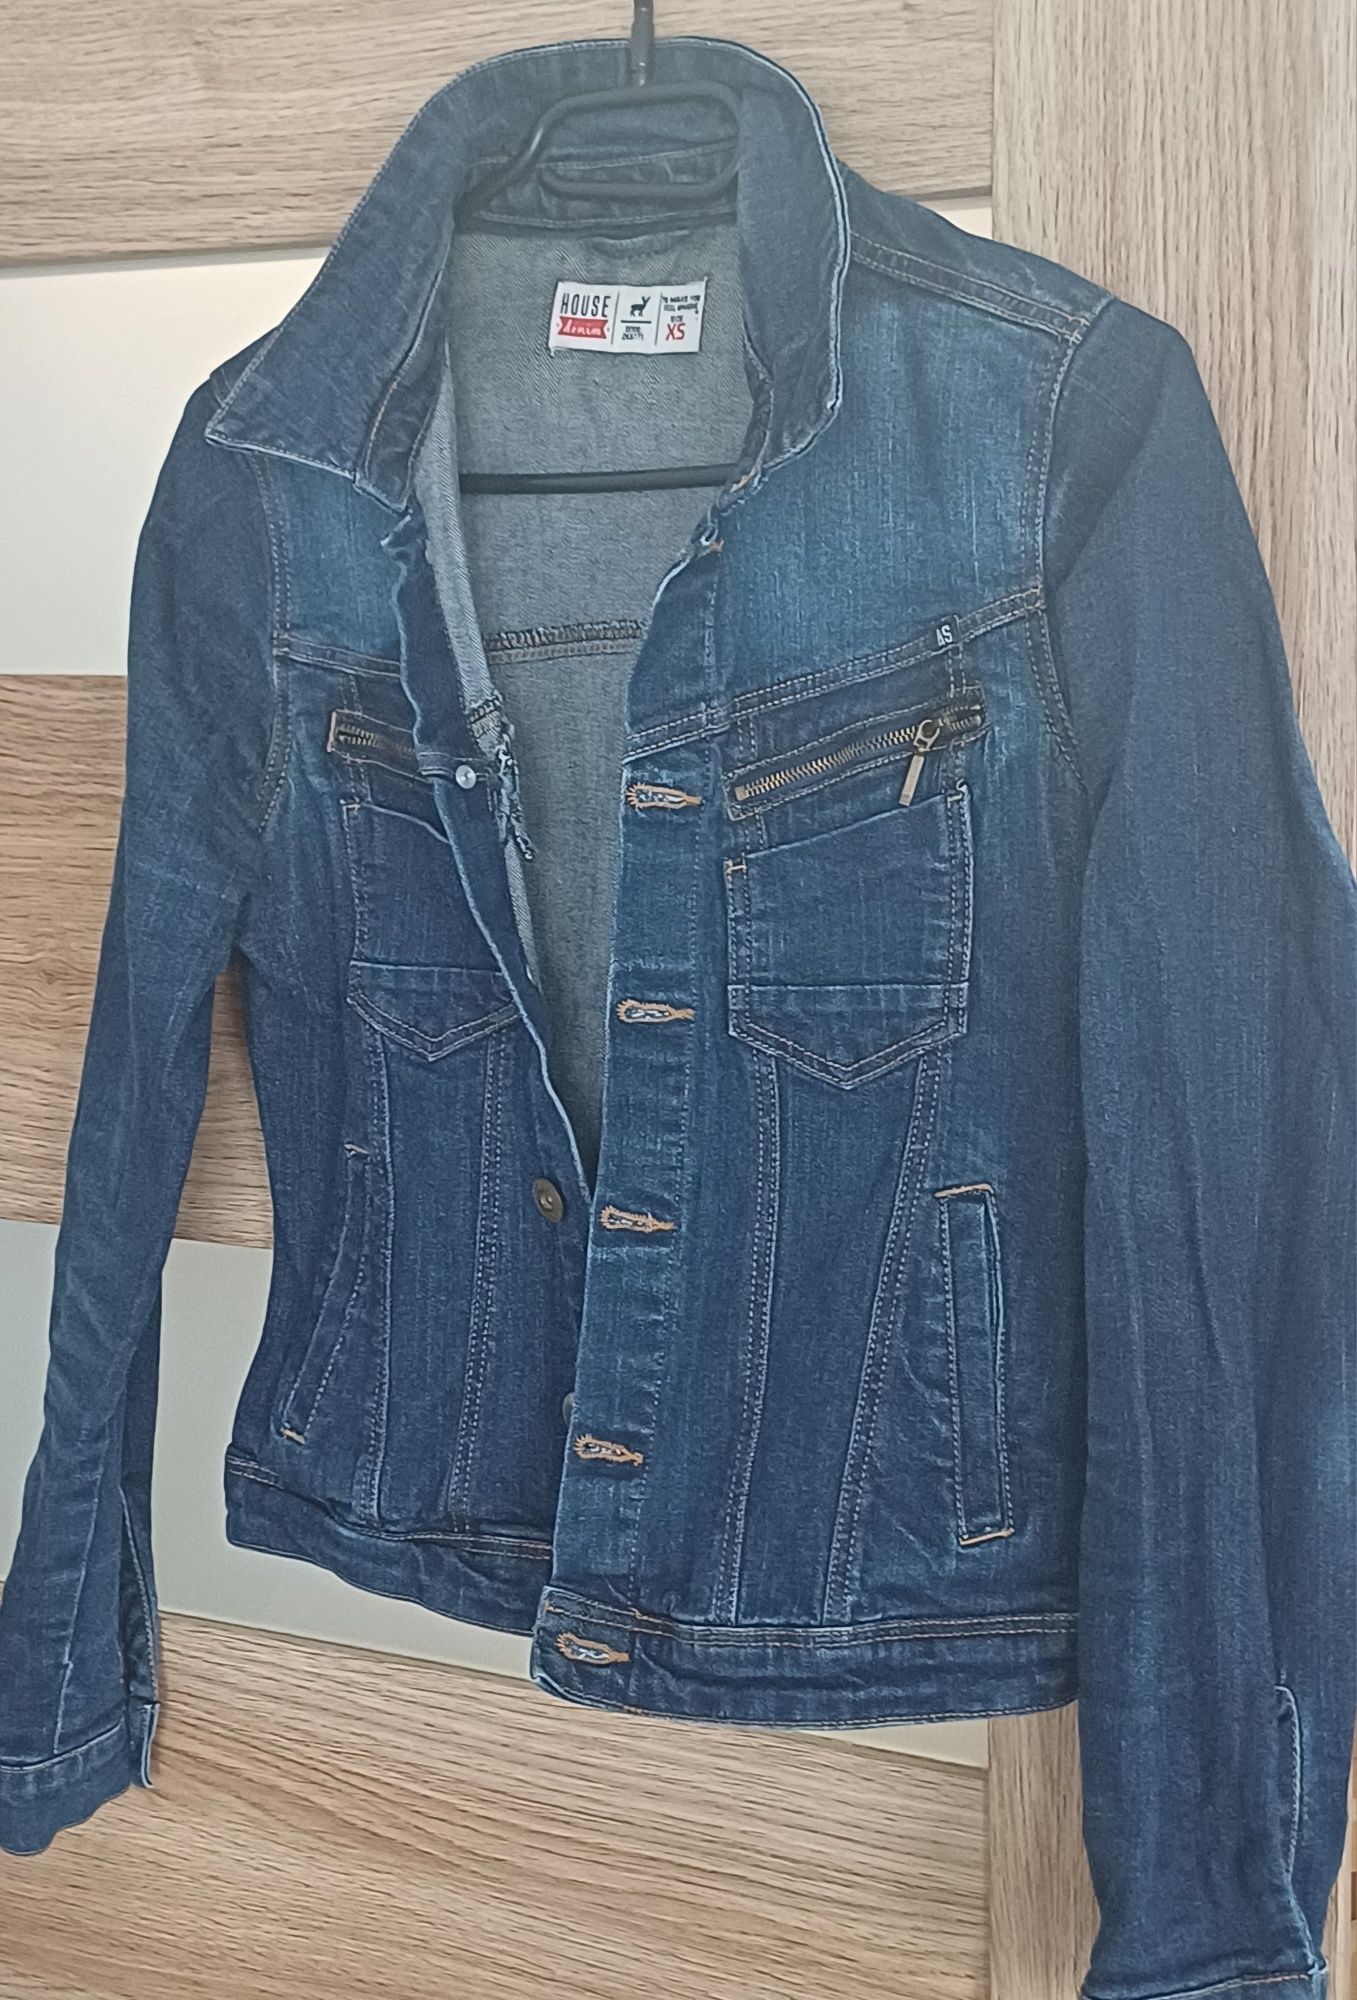 Bluza jeans katana House ciemny granat rozmiar XS,  34 tylko 14 zł